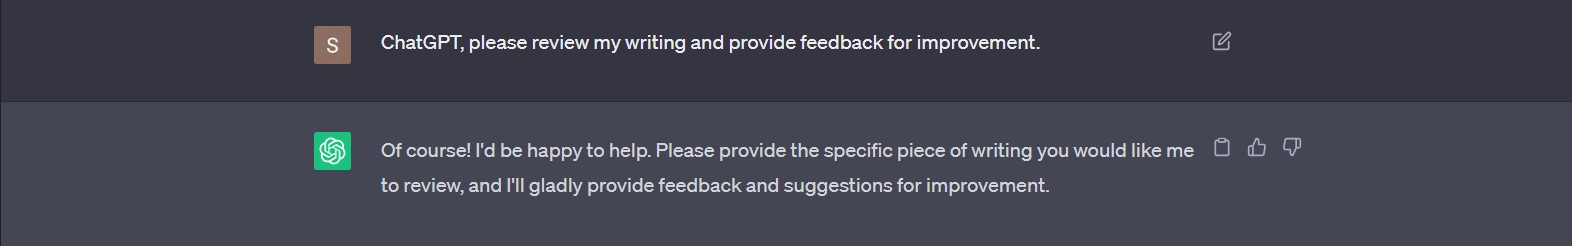 resposta do chatgpt a um prompt de feedback